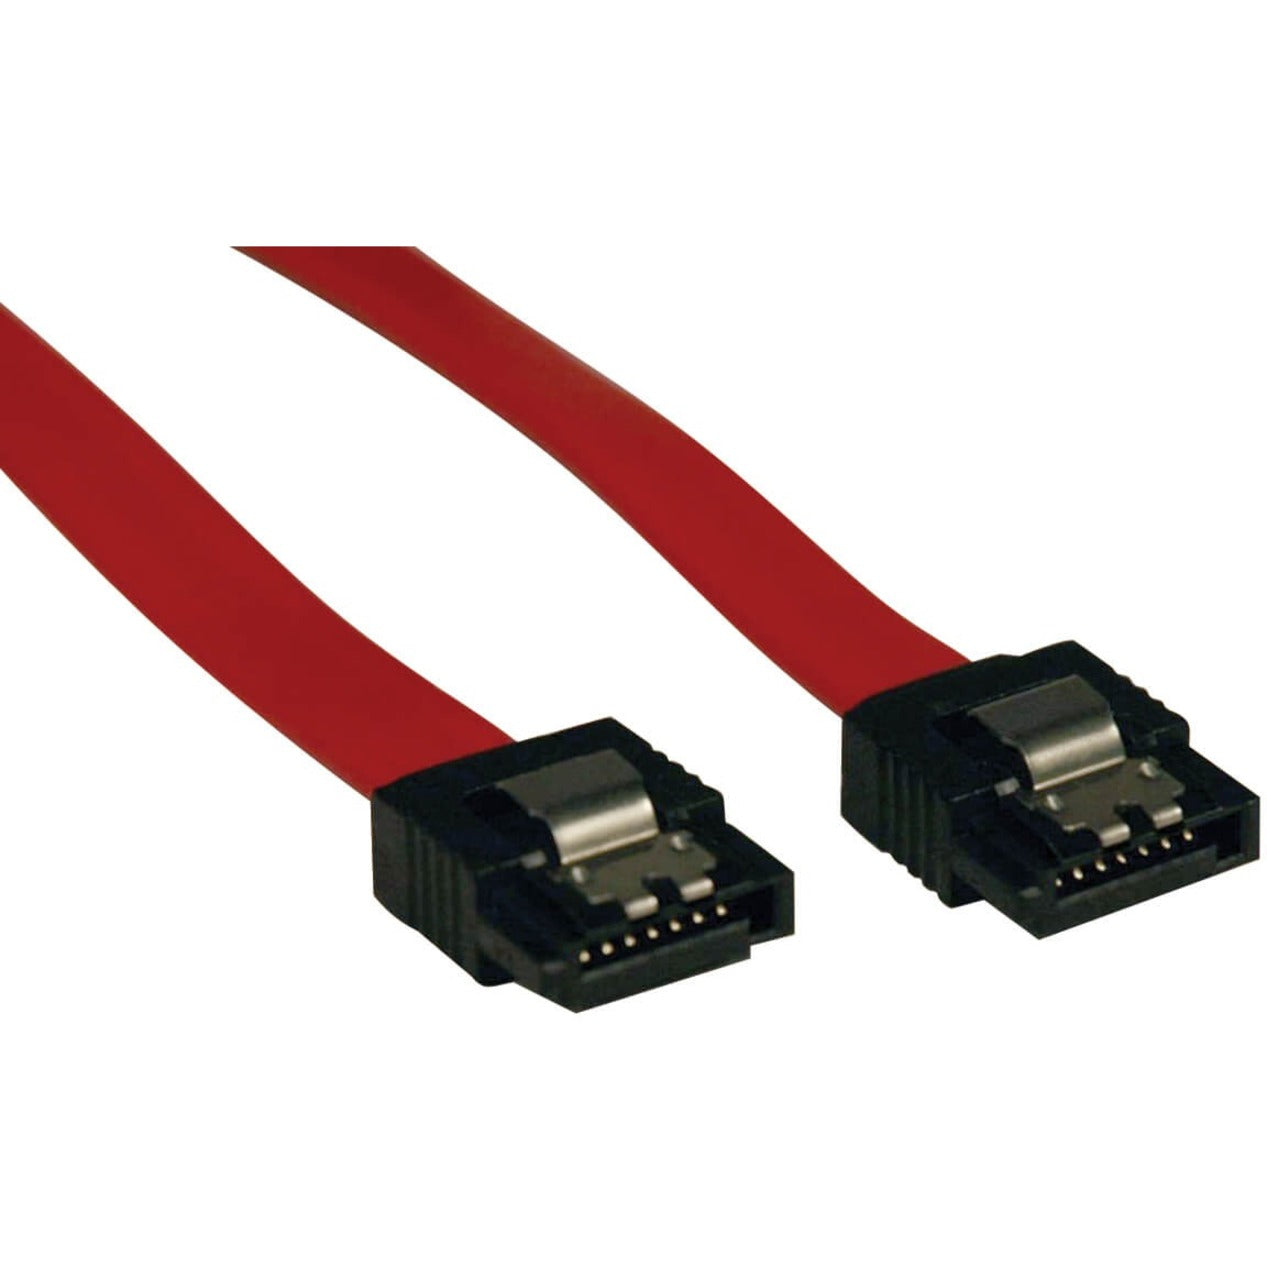 Tripp Lite P940-08I Serial ATA Signal Cable, 8" - High-Speed Data Transfer, EMI/RF Protection